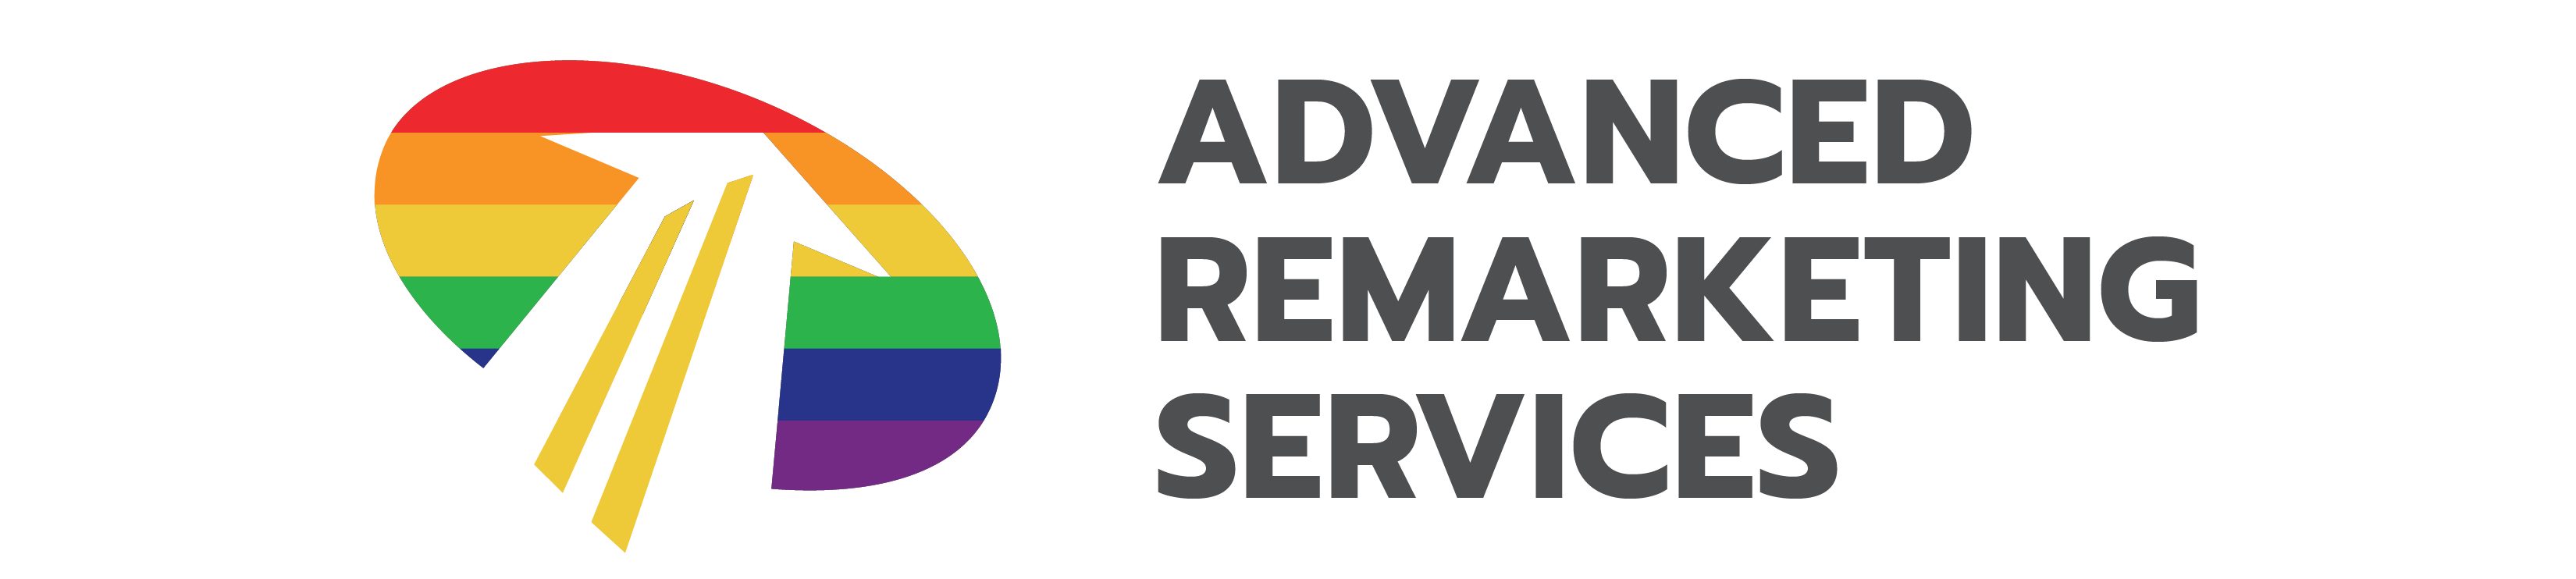 Advanced Remarketing Services